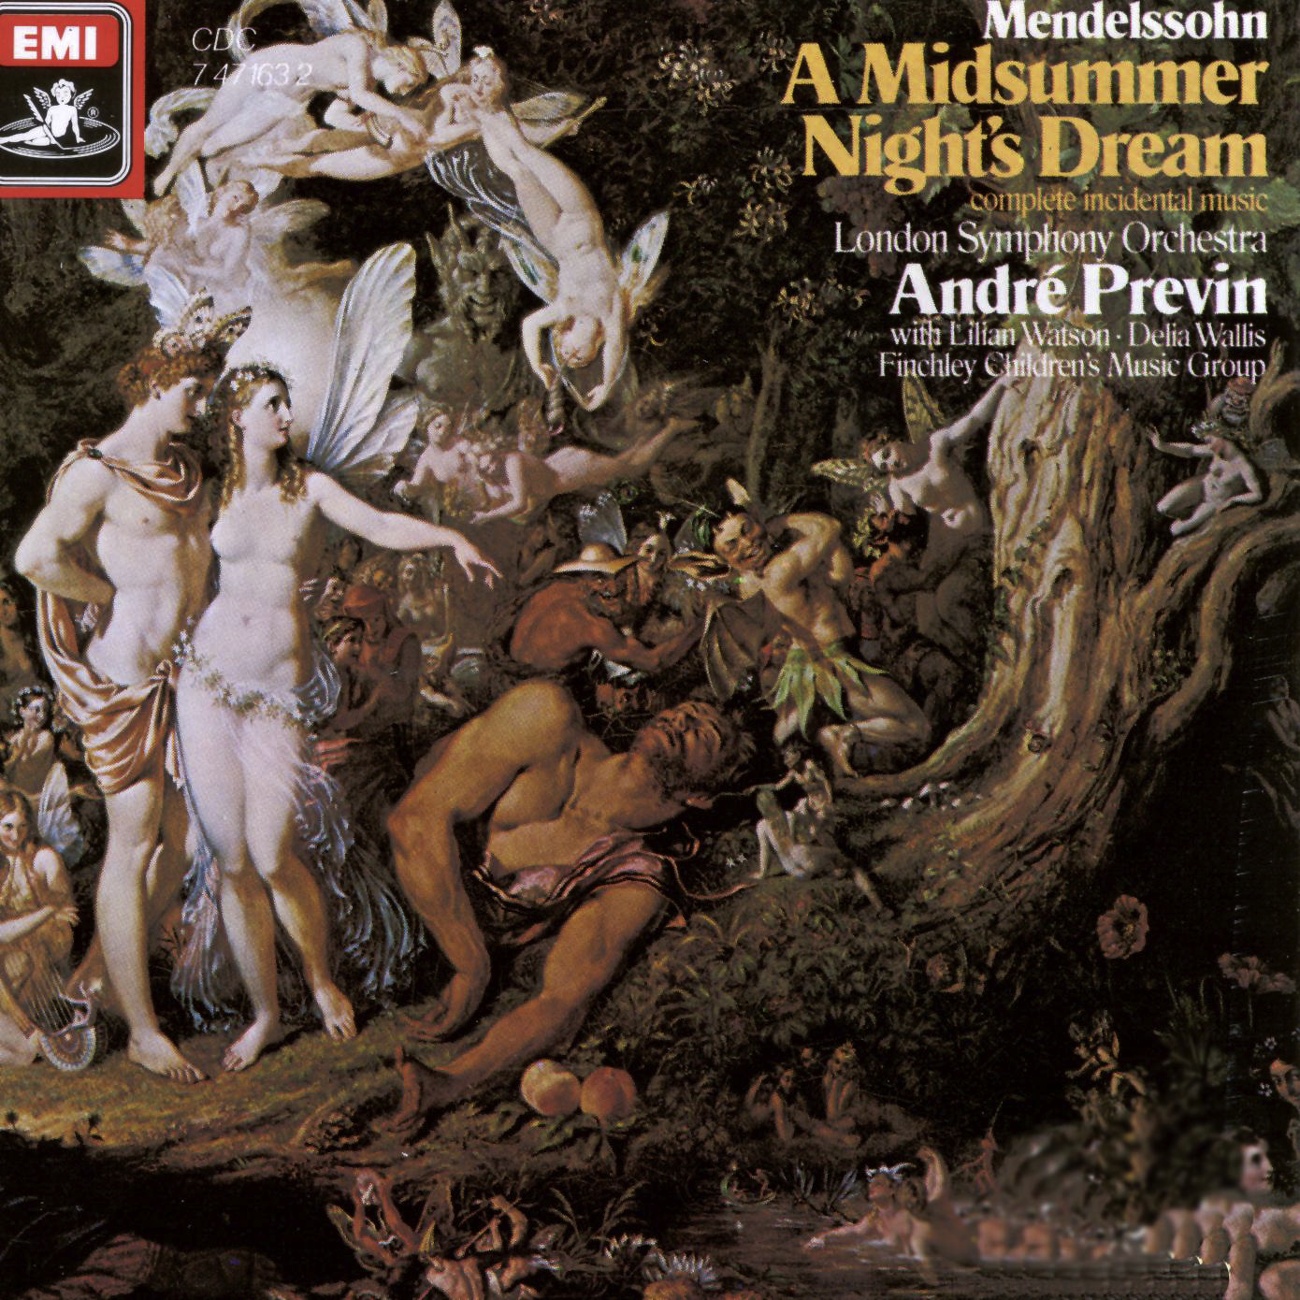 A Midsummer Night's Dream - incidental music Opp. 21 and 61 (1985 Digital Remaster): Scherzo (Entr'acte to Act 2)